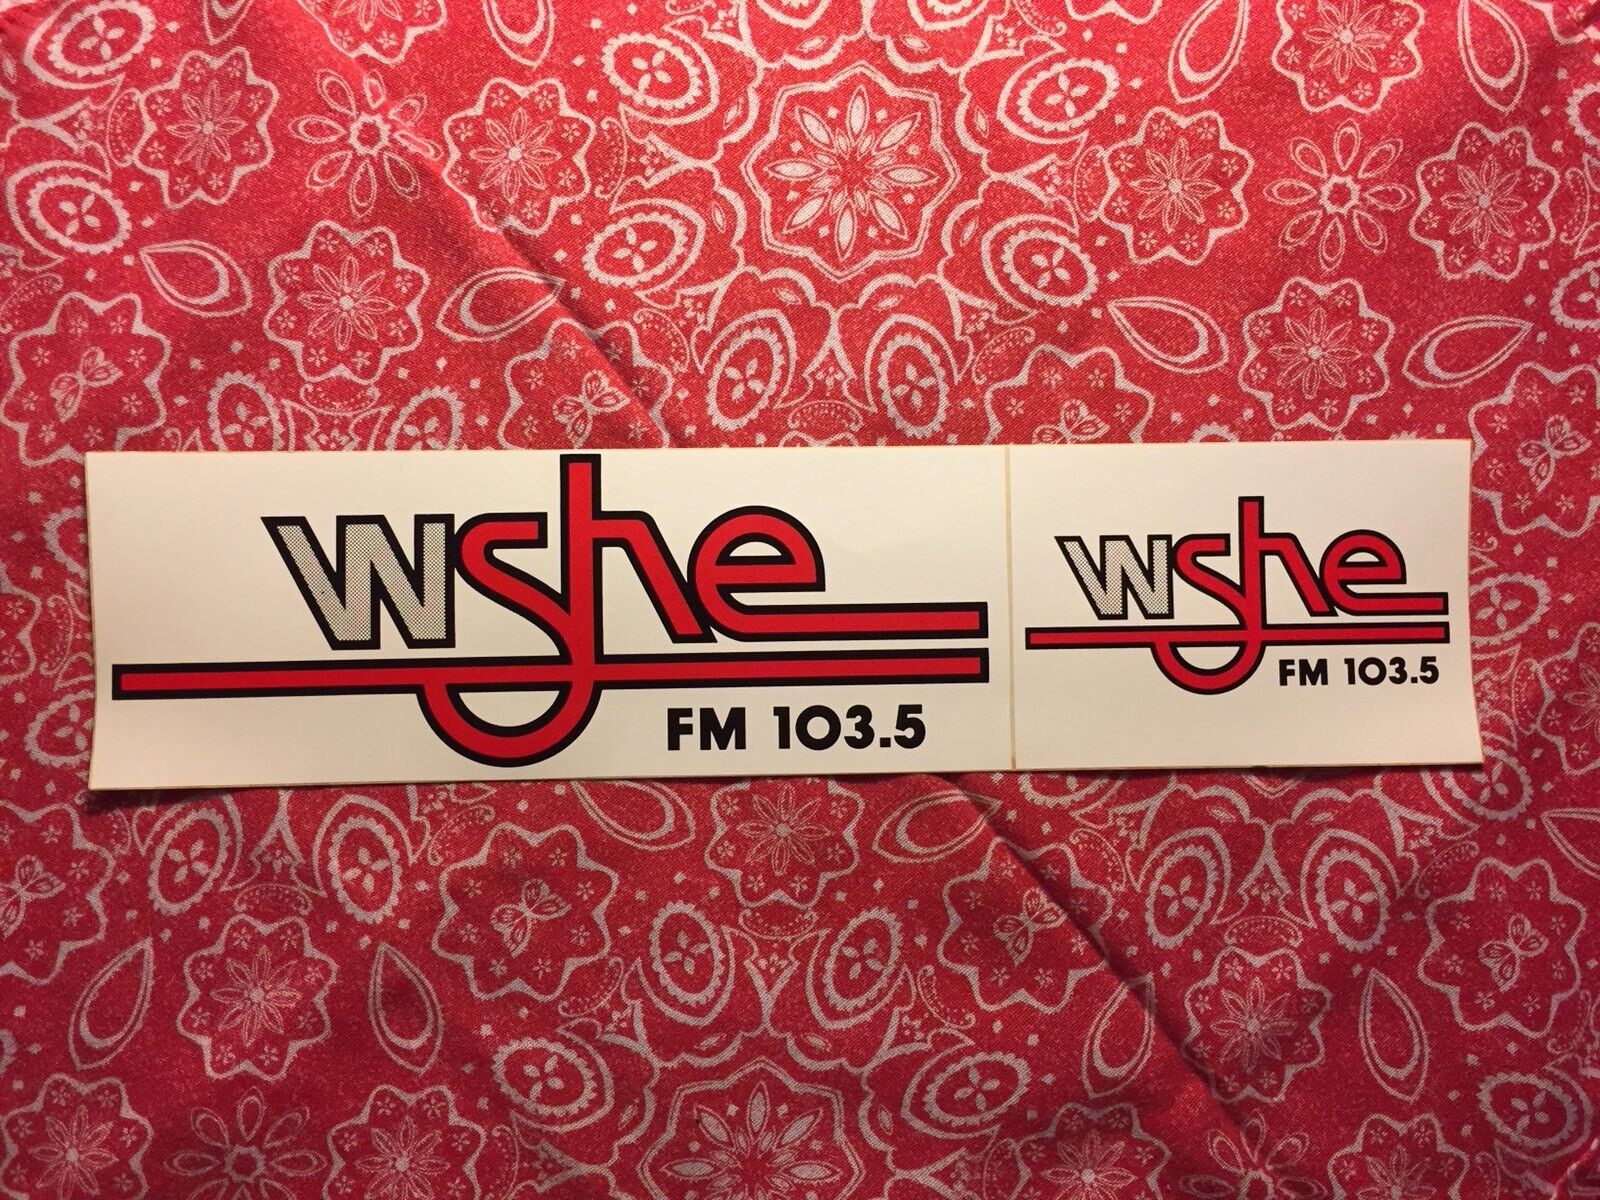 WSHE FM Radio Bumper sticker Miami/ Ft. Lauderdale 103.5 LEGENDARY ROCK STATION